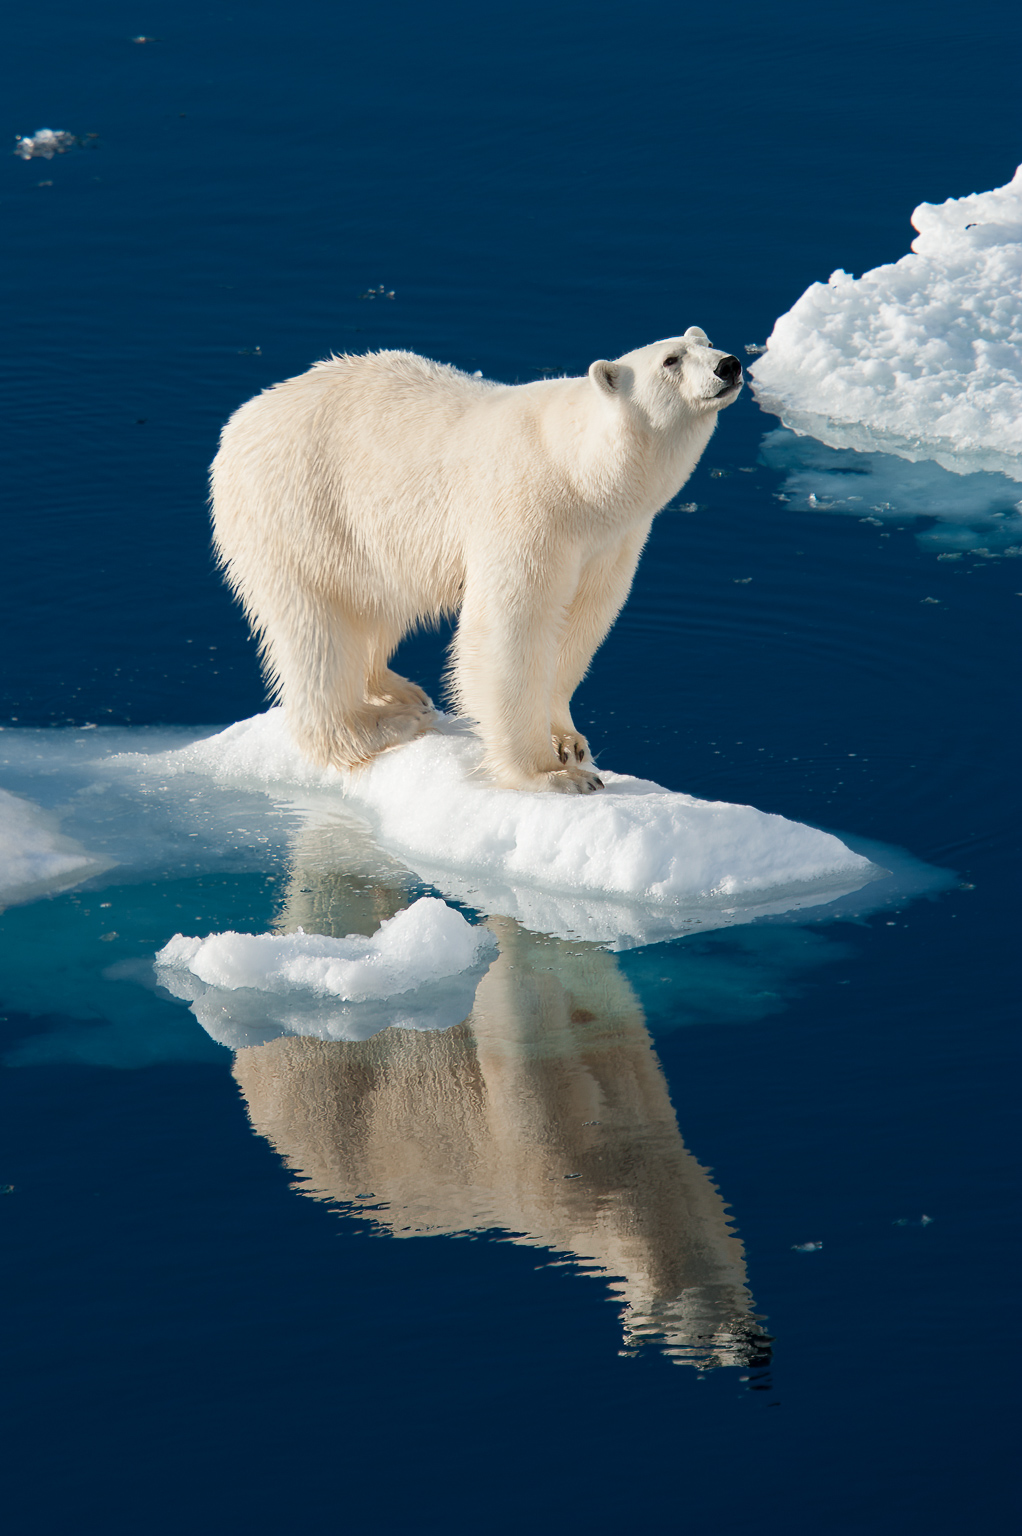 polar bear standing on small outcrop of sea ice against very blue sea. looks like glacier mint bear. taken by ian mears in svalbard